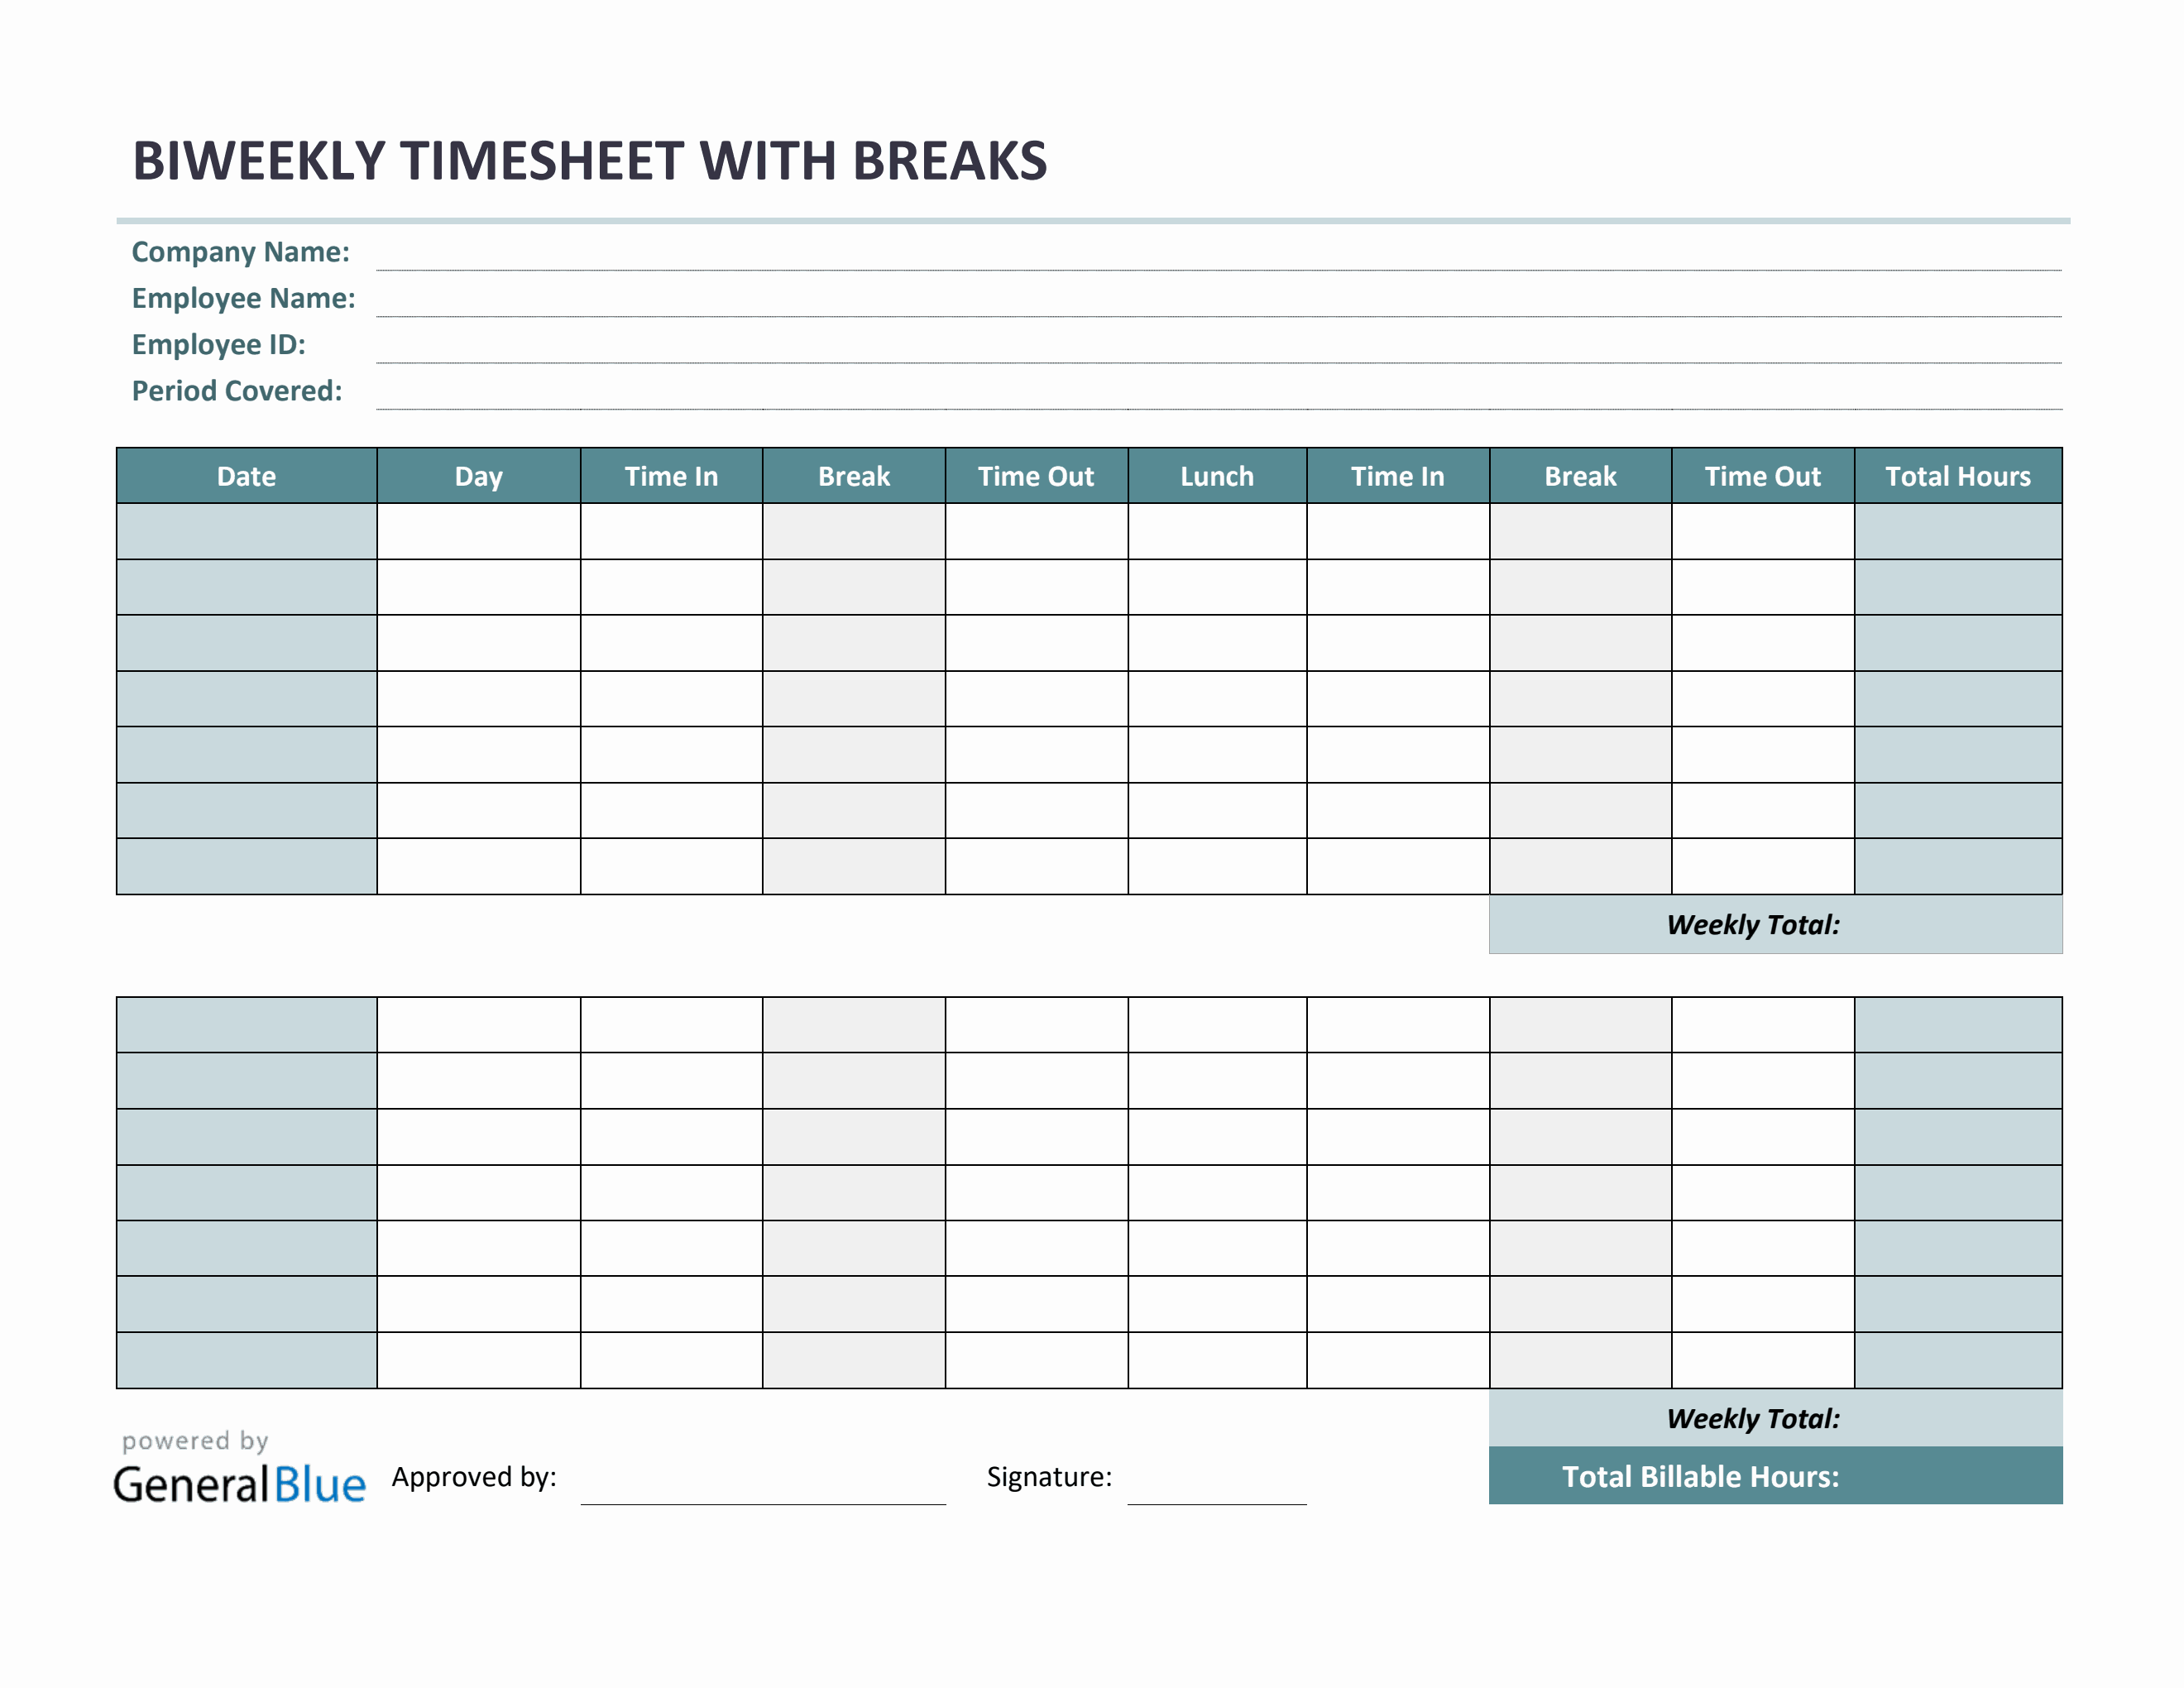 biweekly-schedule-template